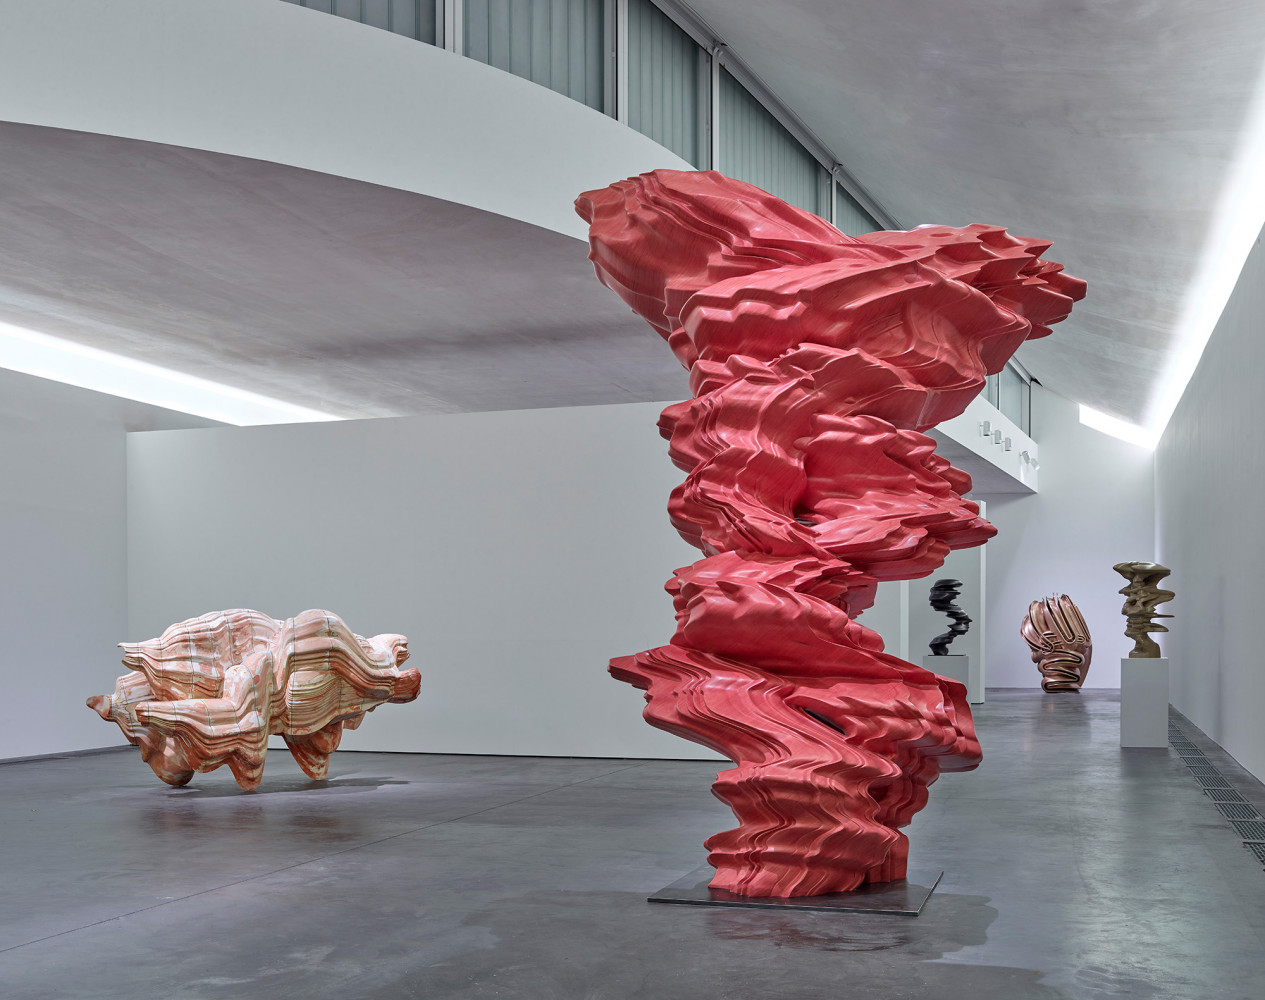 Tony Cragg, ‘Made on Earth, Heart Museum, Herning, DK’, Installationsansicht, 2022